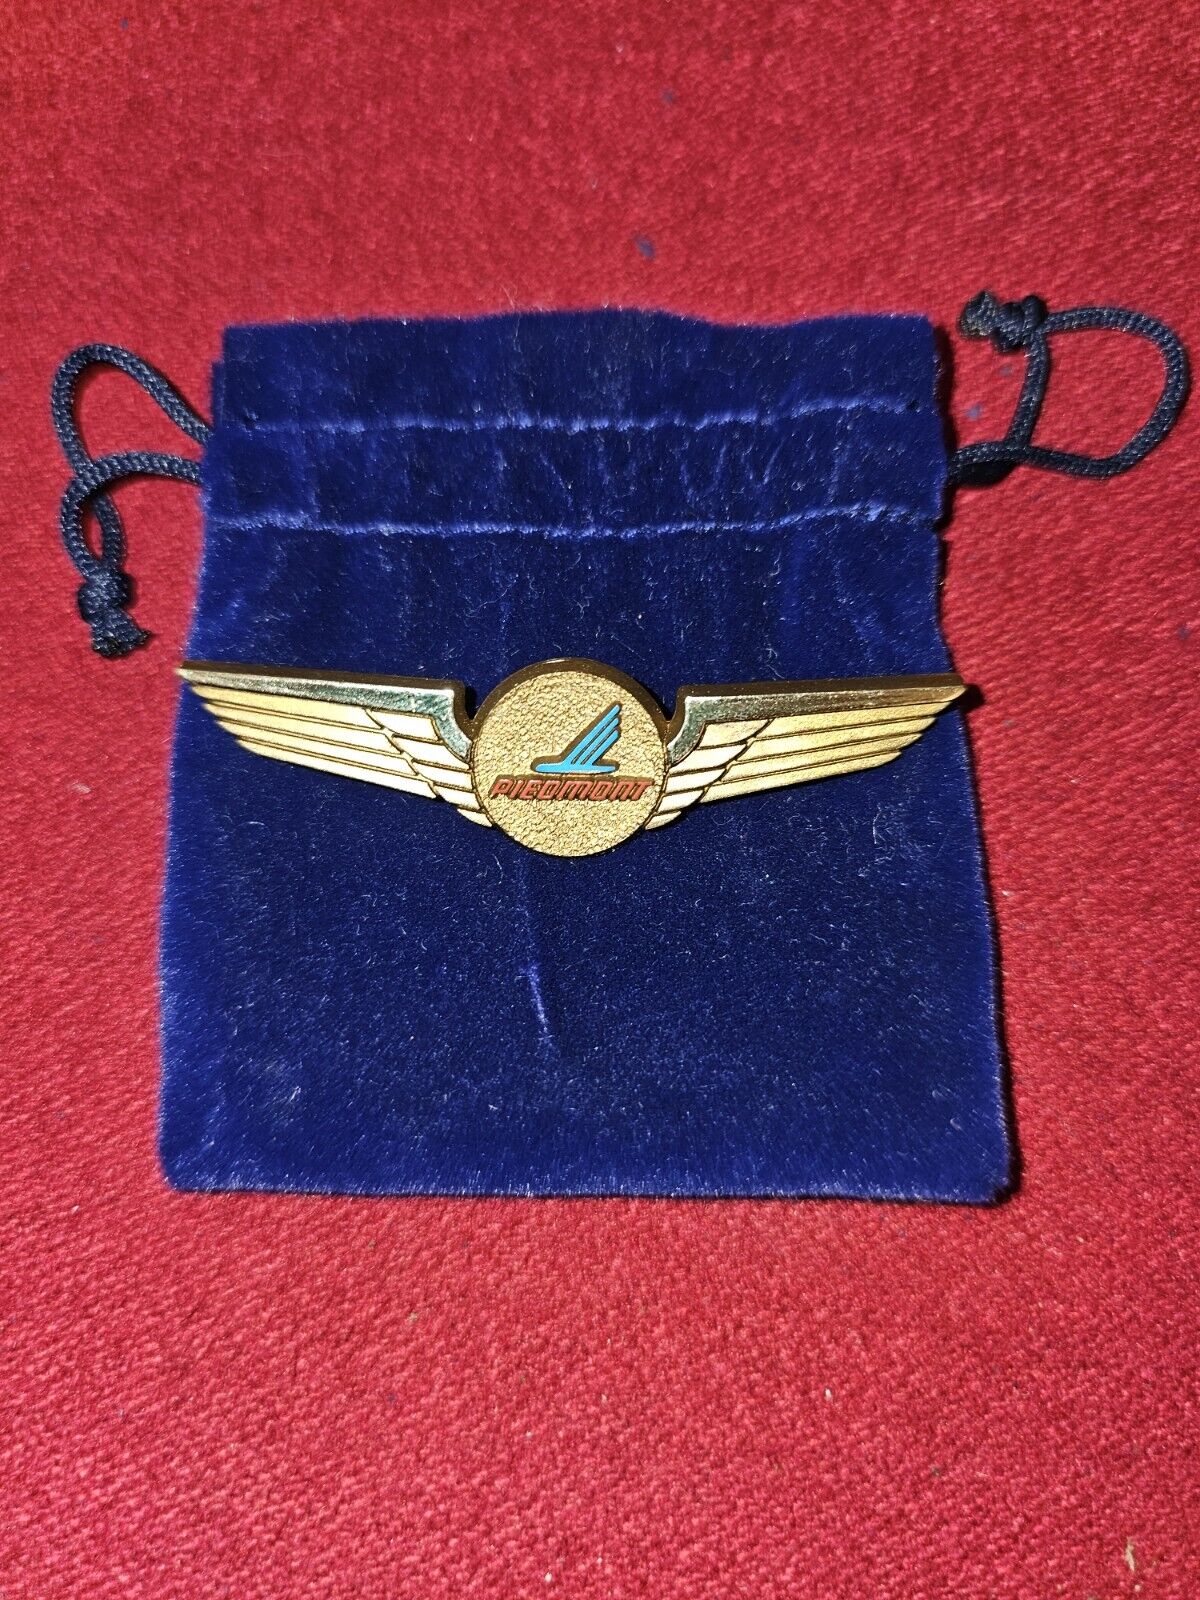 Vintage 1948 Piedmont Wings With Original Felt Bag